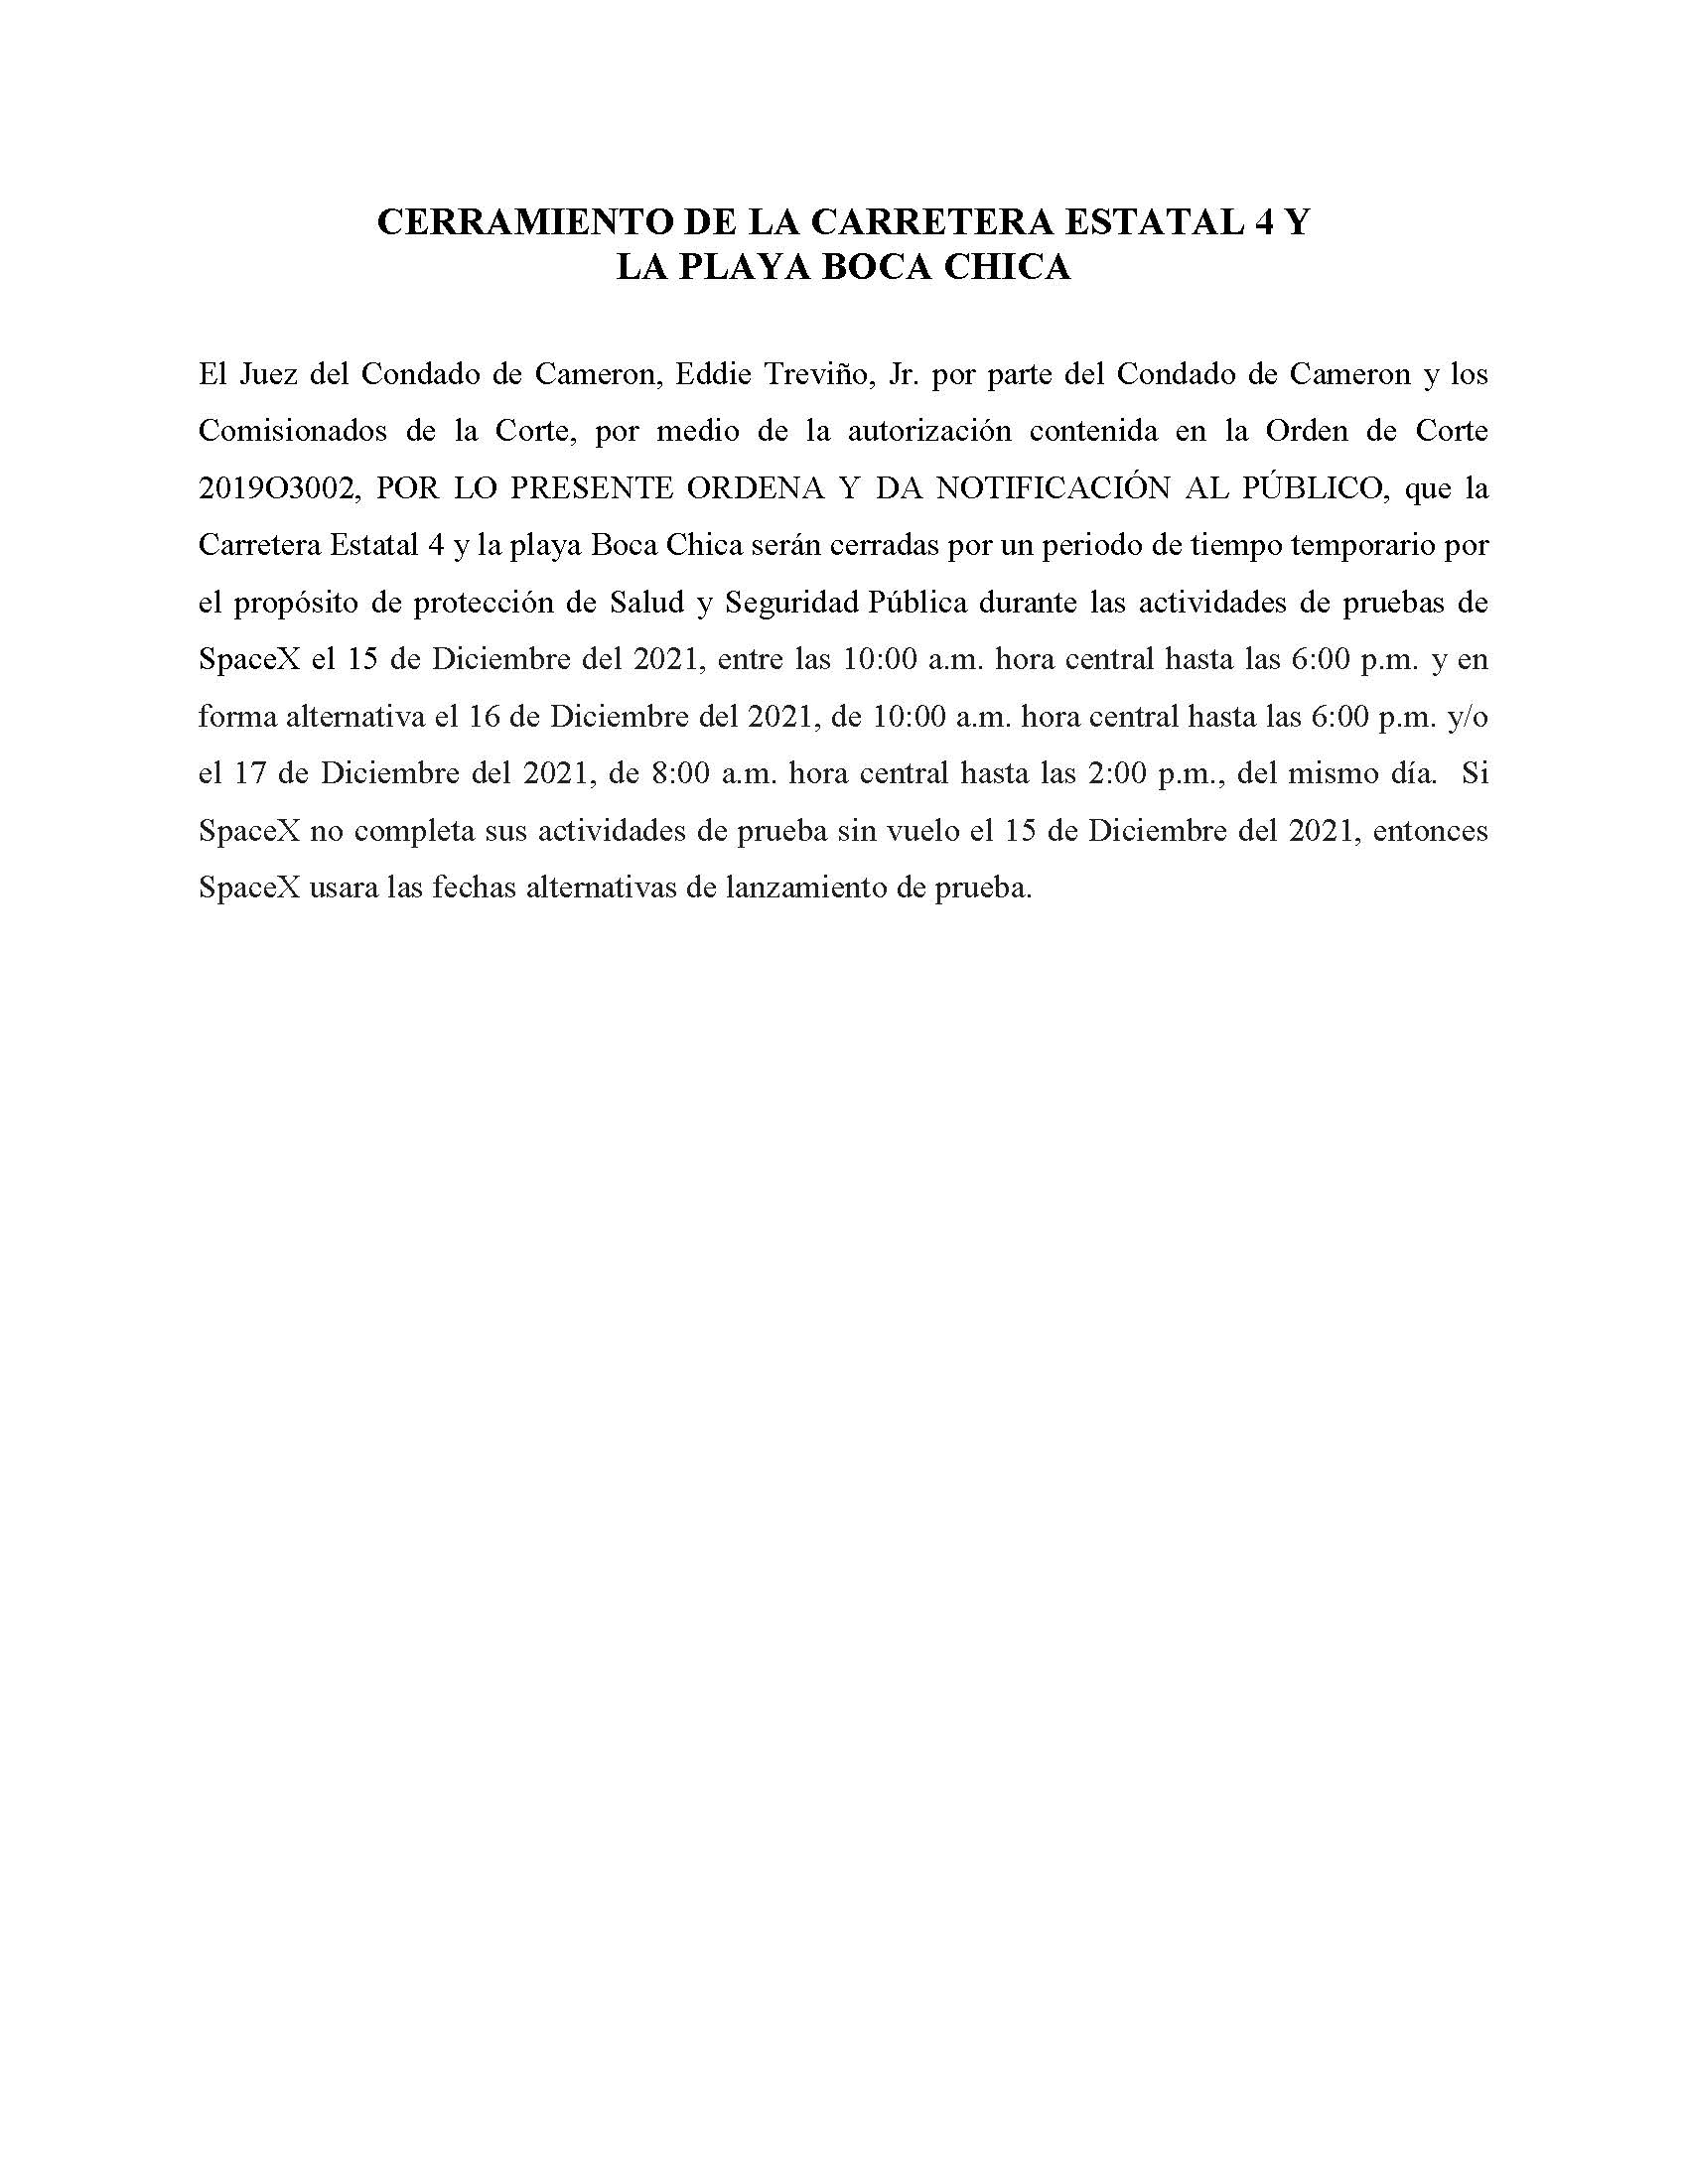 ORDER.CLOSURE OF HIGHWAY 4 Y LA PLAYA BOCA CHICA.SPANISH.12.15.2021